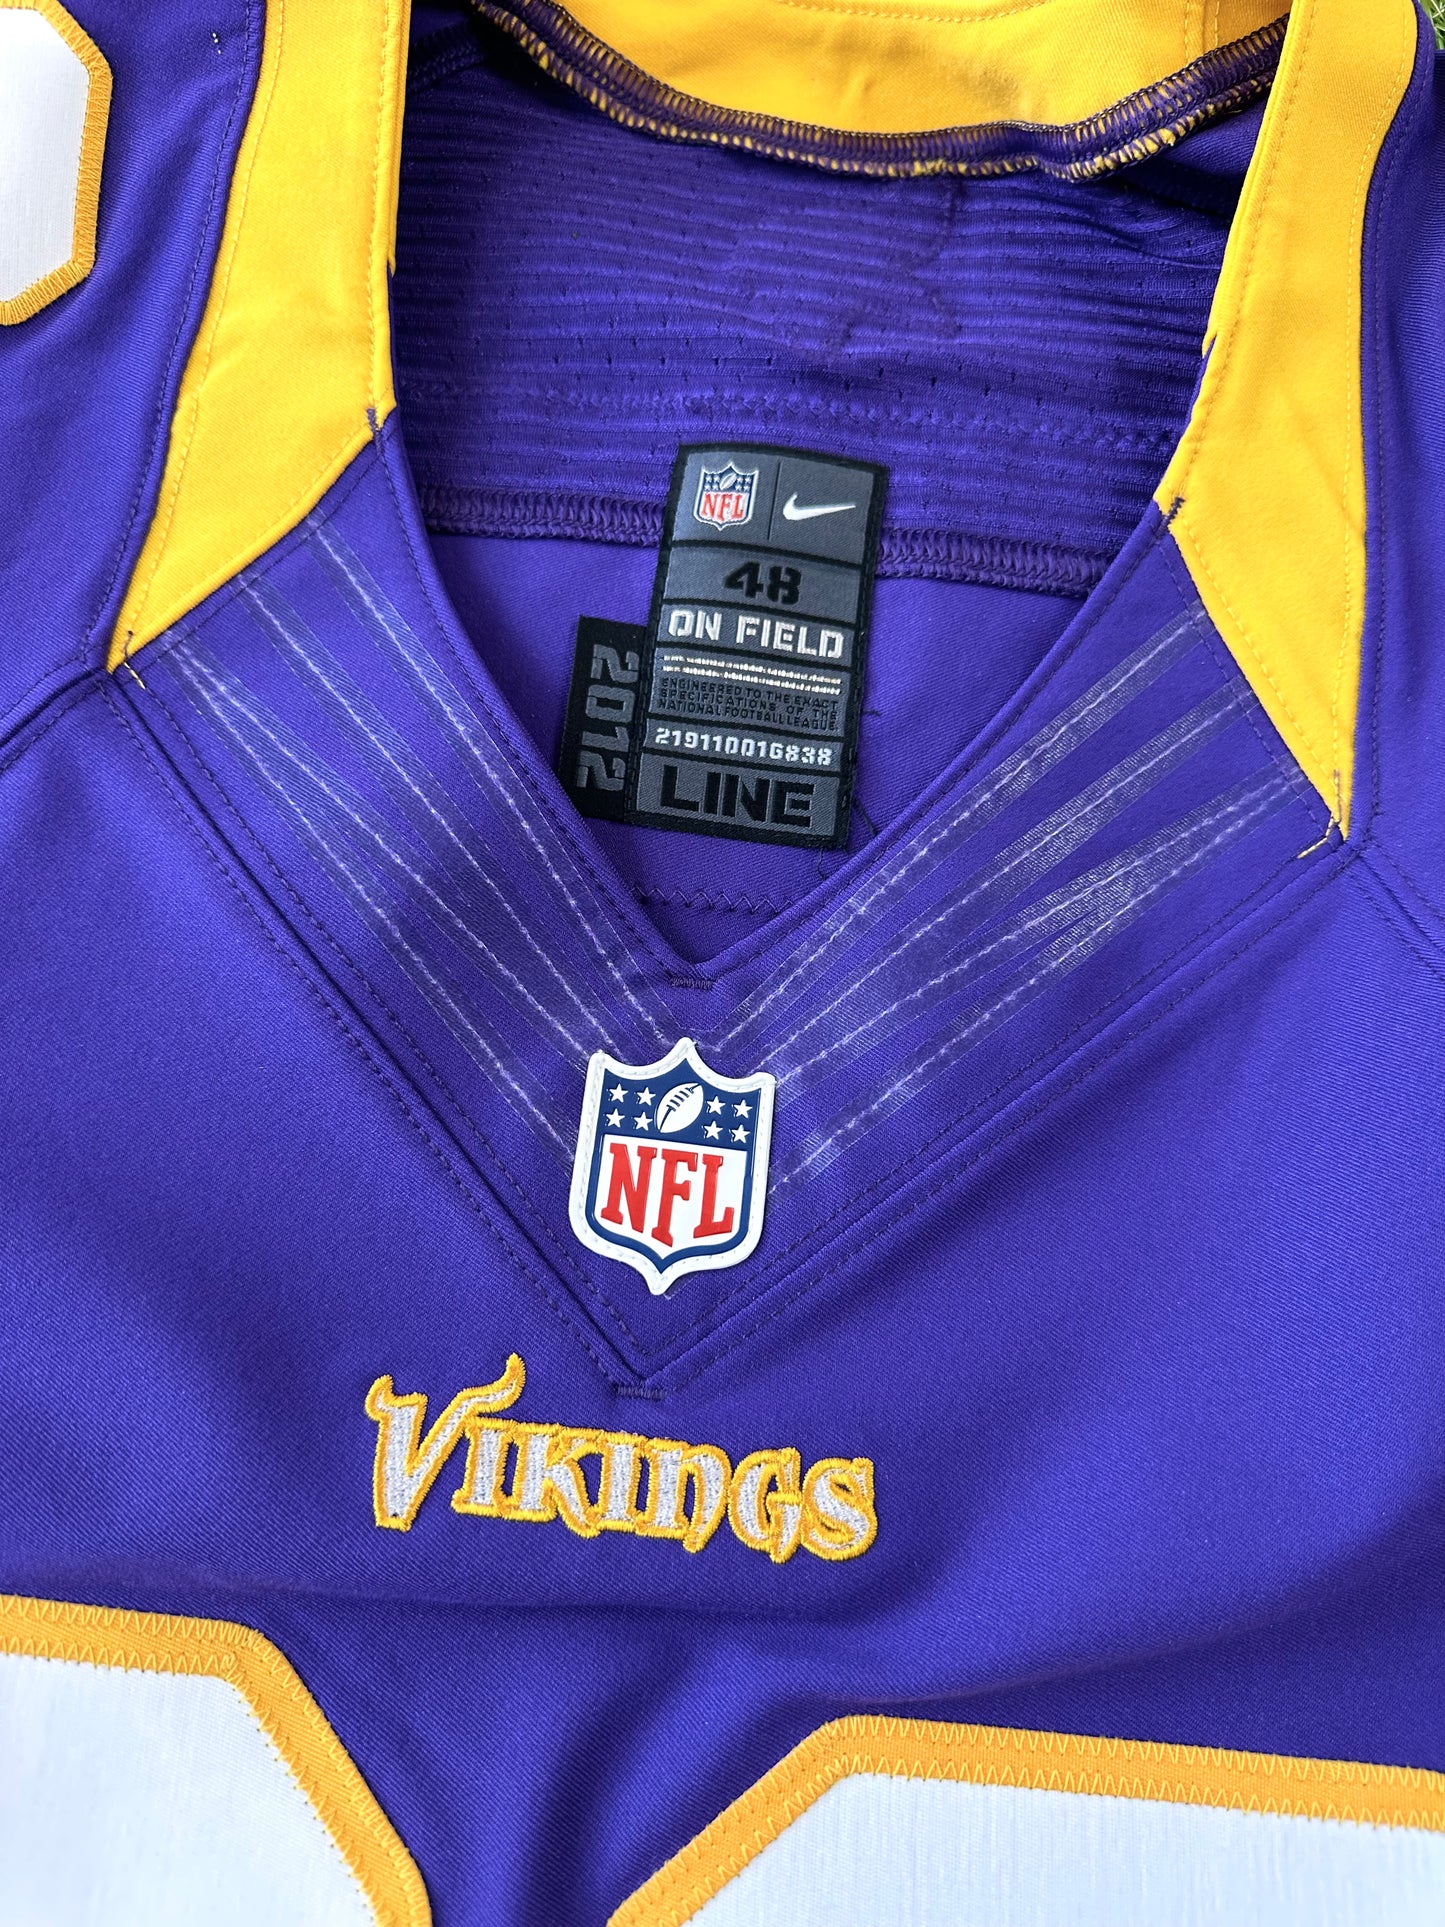 Minnesota Vikings Adrian Peterson 2012 Team Issued NFL Football Jersey (48/XL)